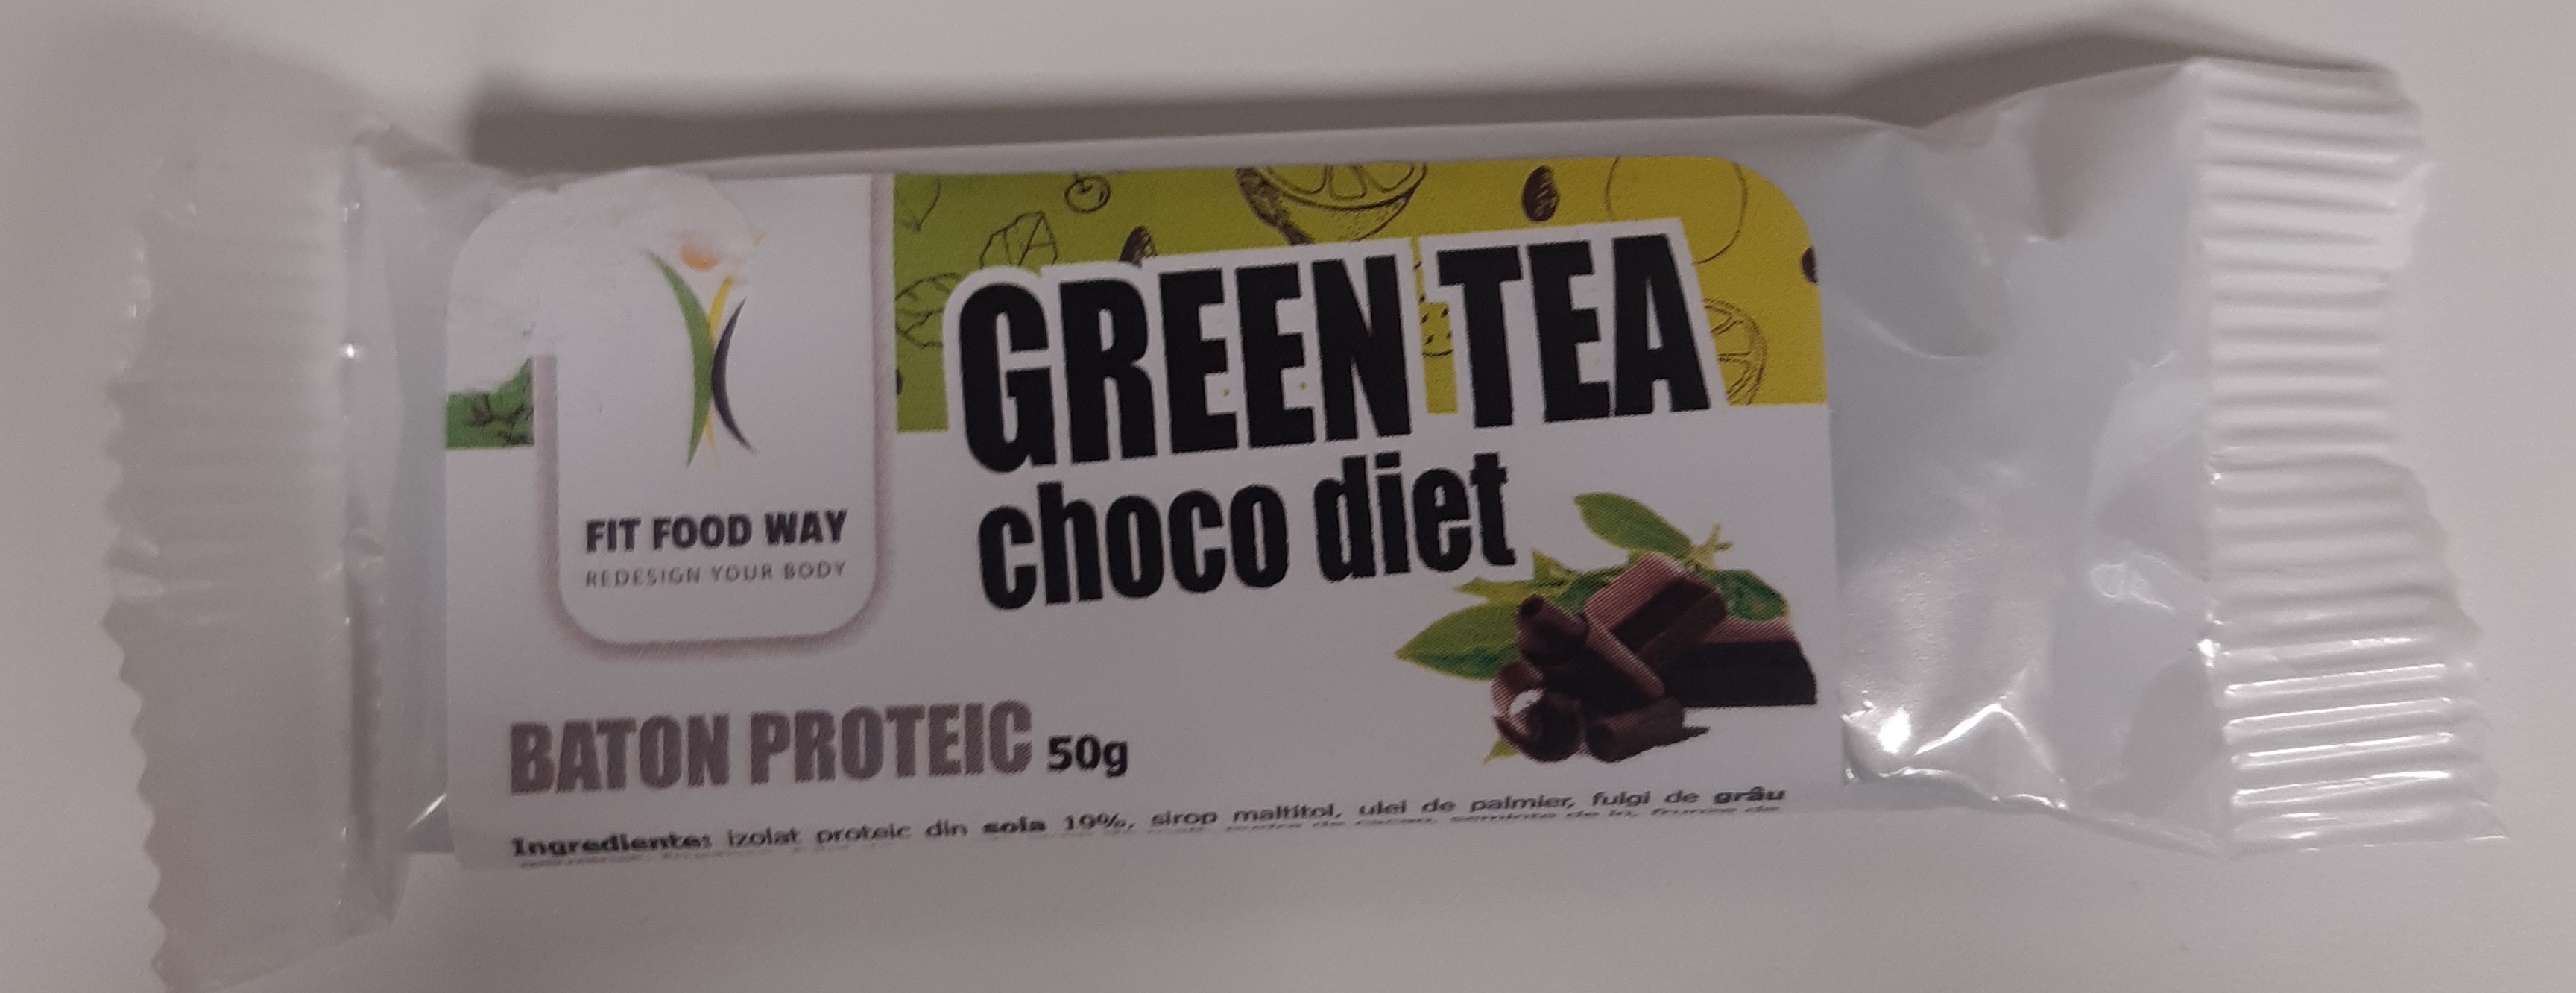 Alimente - Baton proteic Green Tea Choco Diet, 50g, Fit
, nordpharm.ro